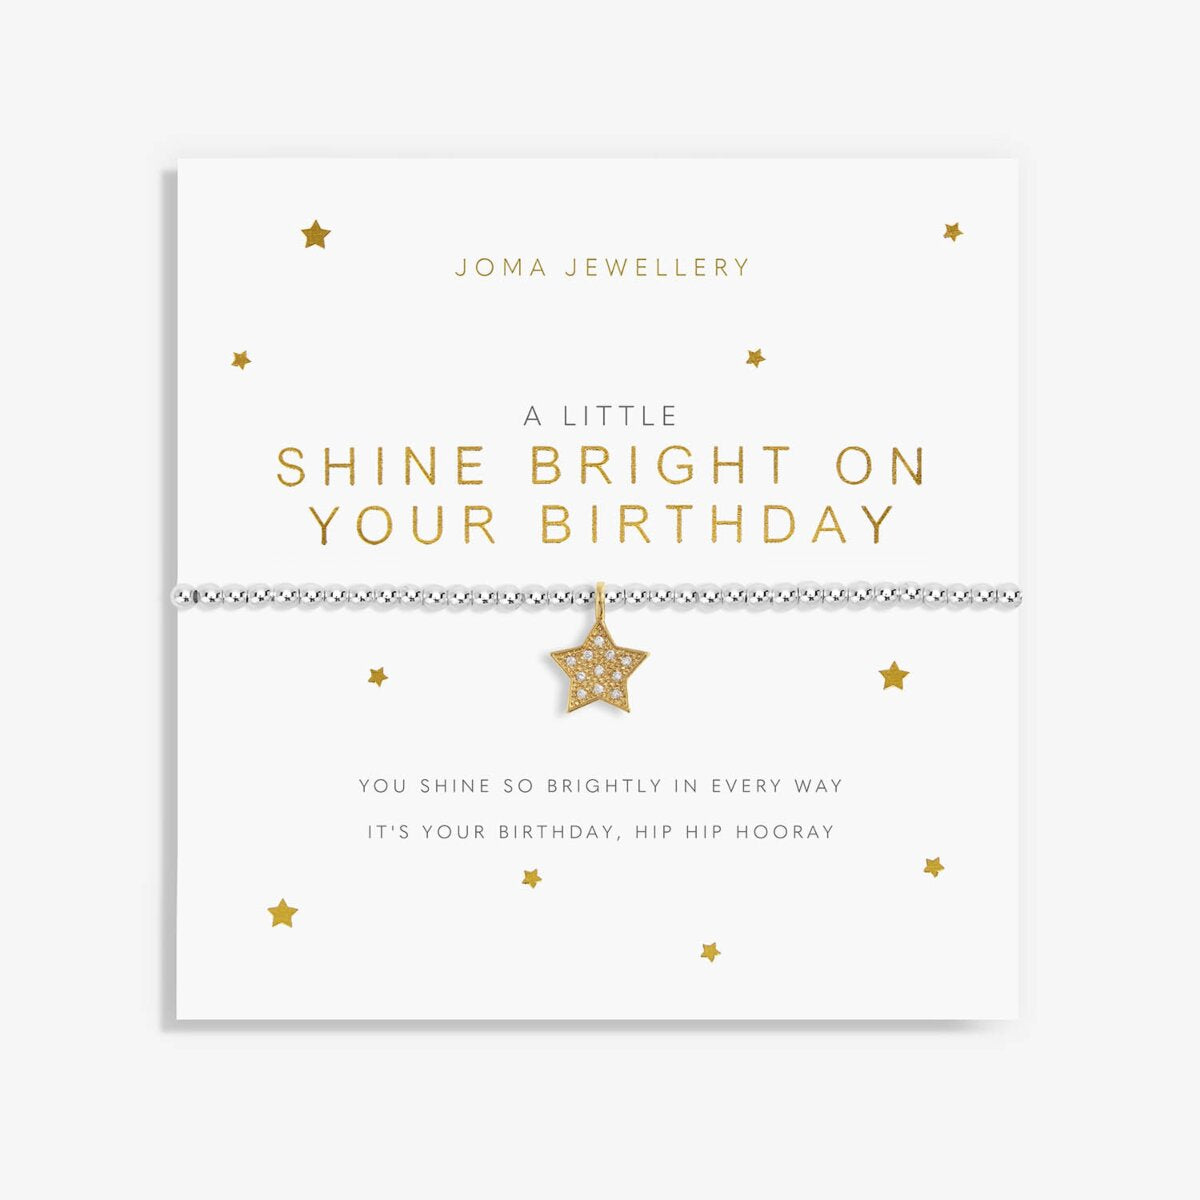 Joma Jewellery 'A Little' Shine Bright Birthday